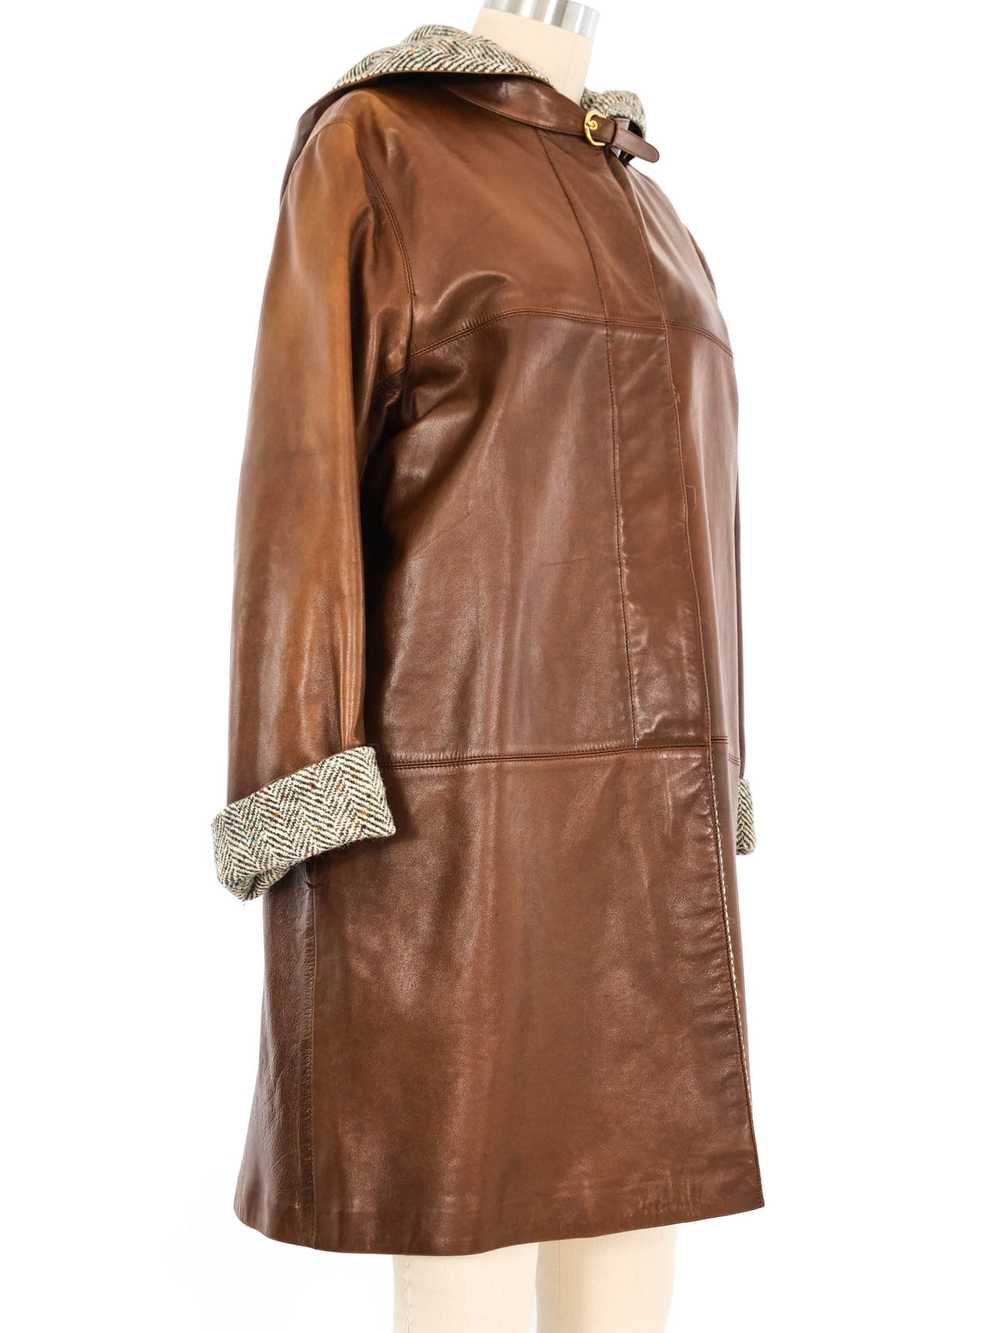 1970s Gucci Caramel Leather Coat - image 3